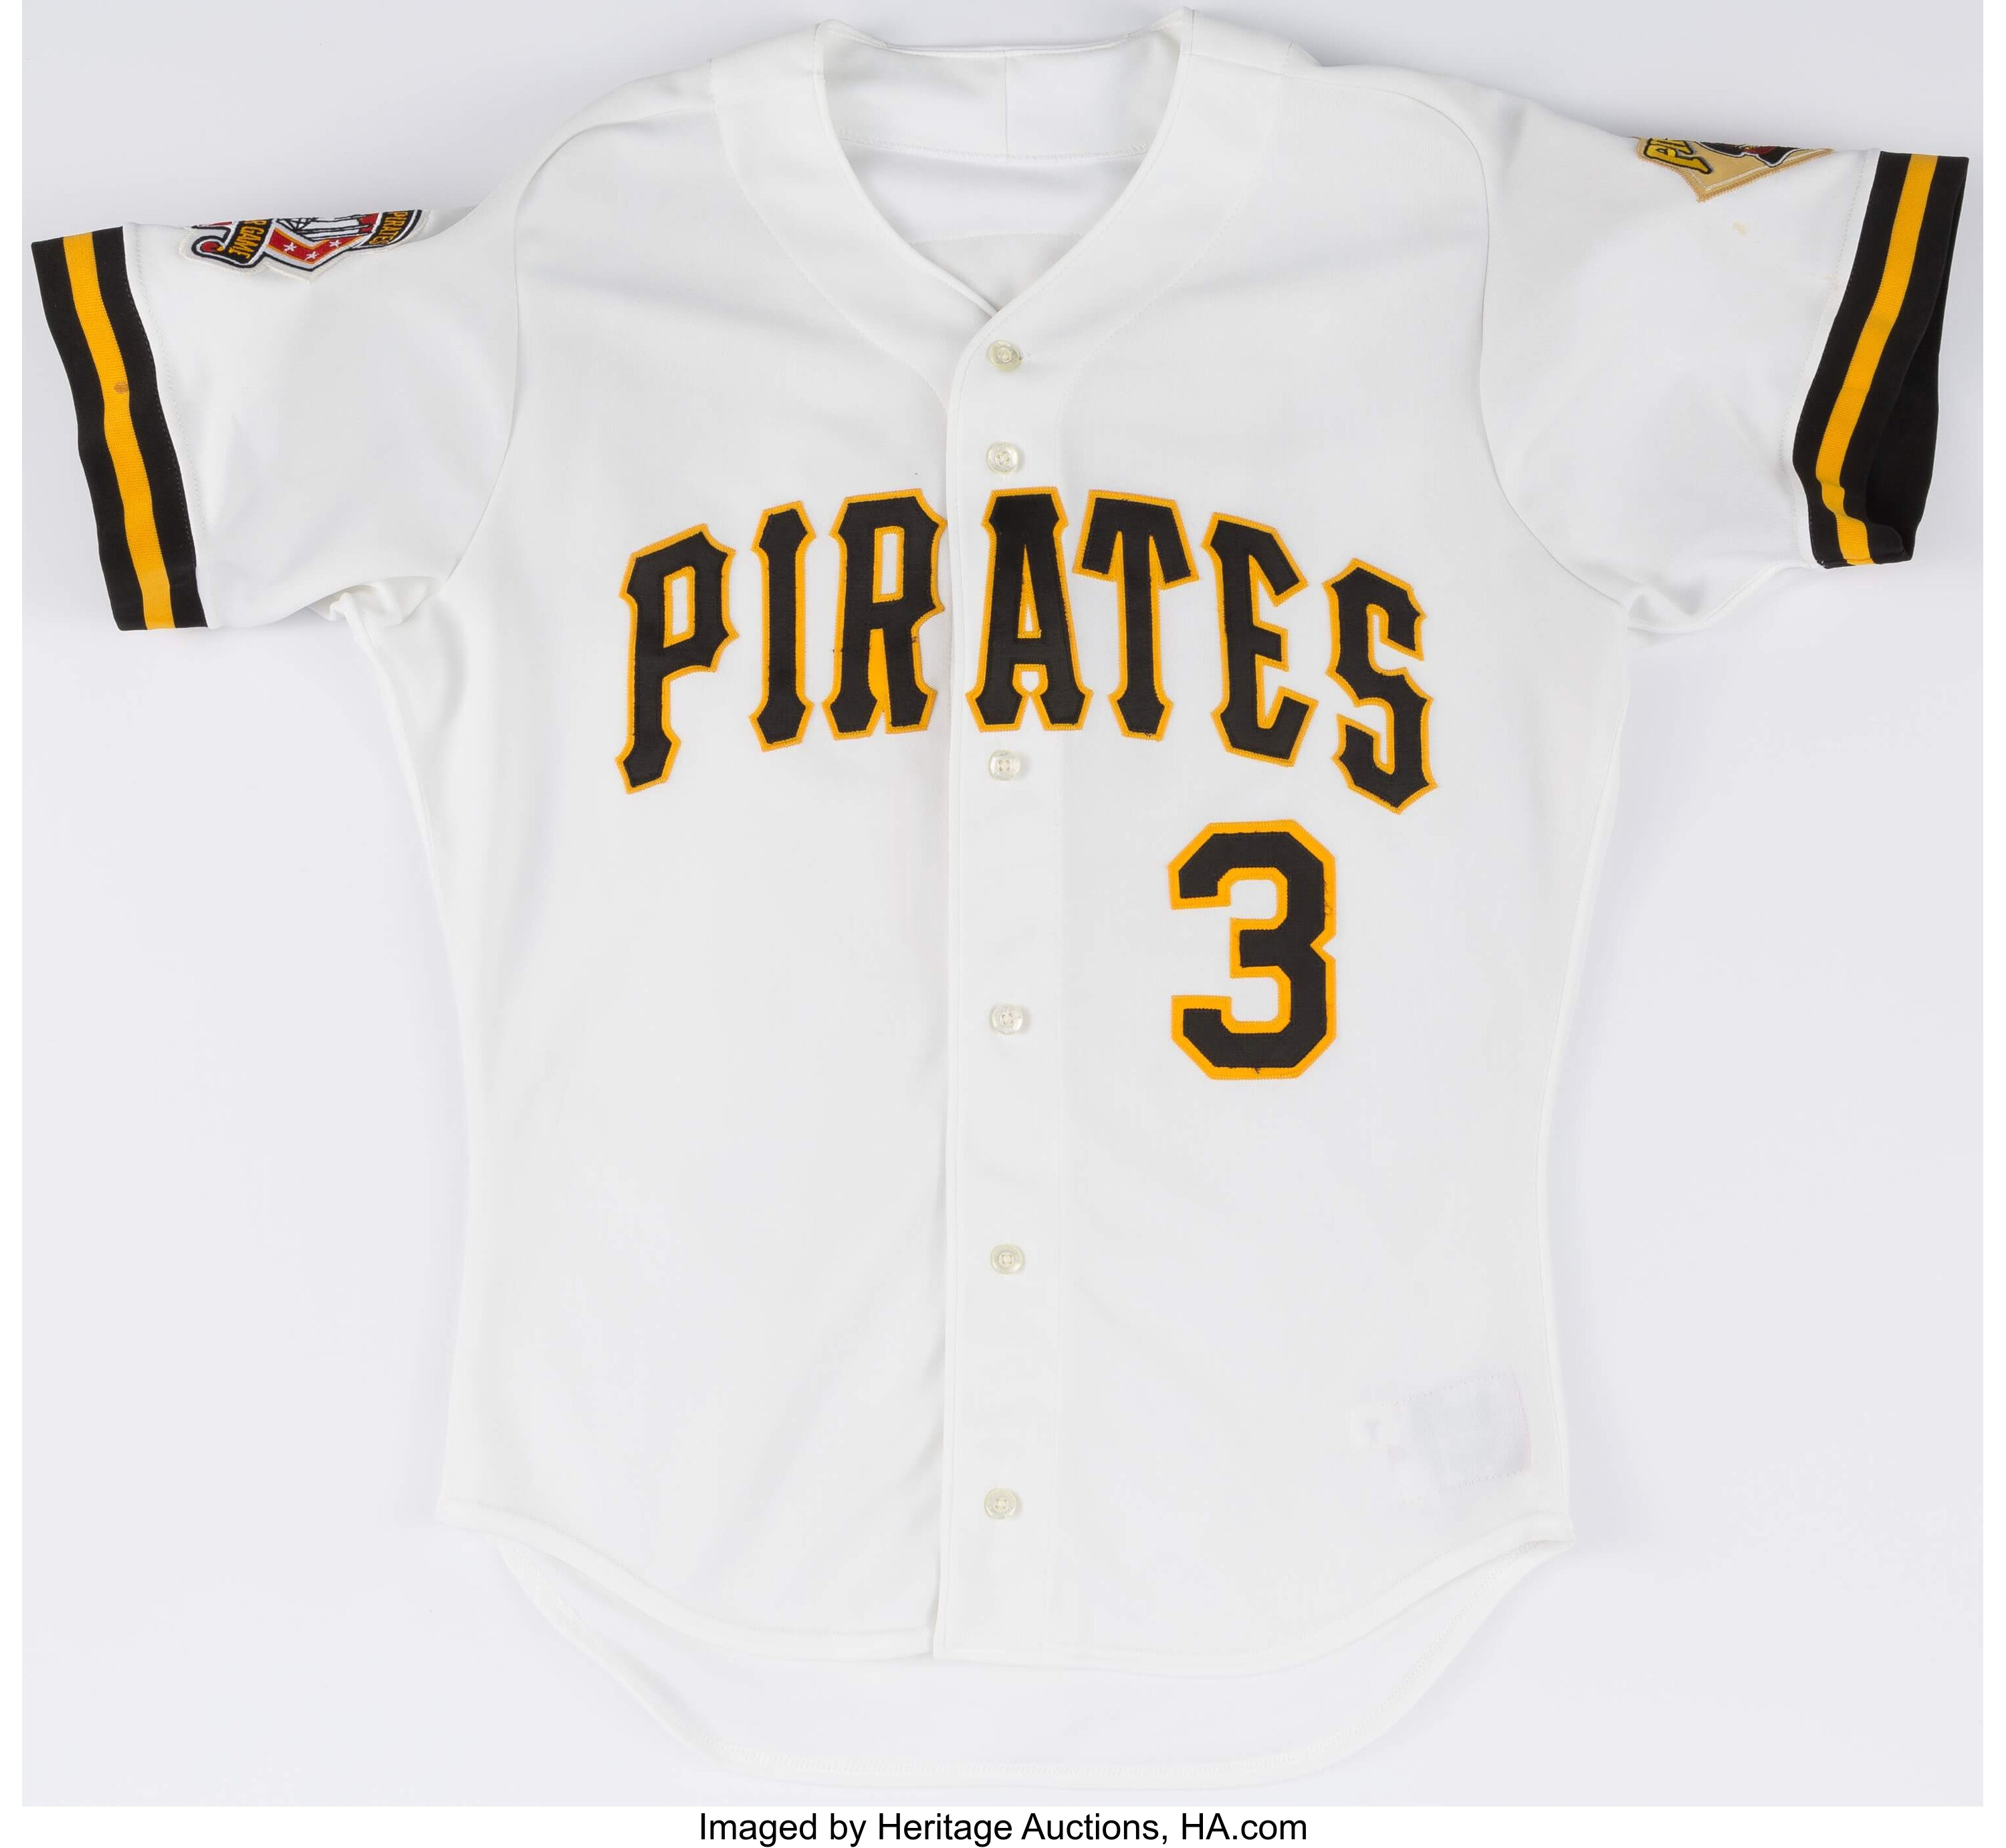 1994 Jay Bell Game Worn Pittsburgh Pirates Jersey.  Baseball, Lot  #44139